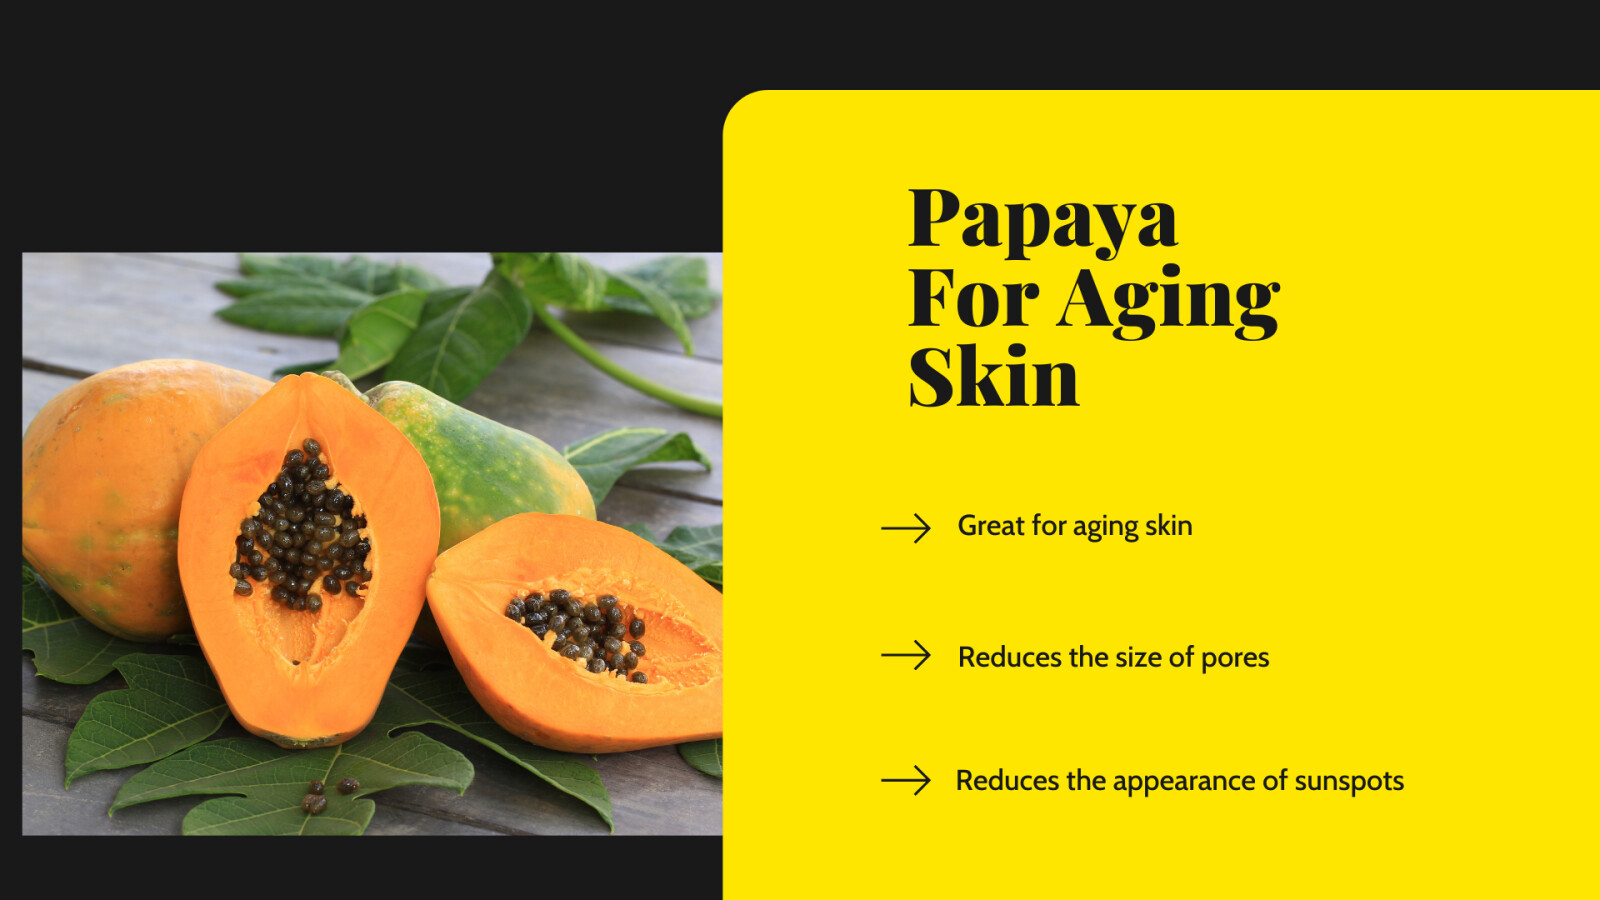 The Benefits of Papaya